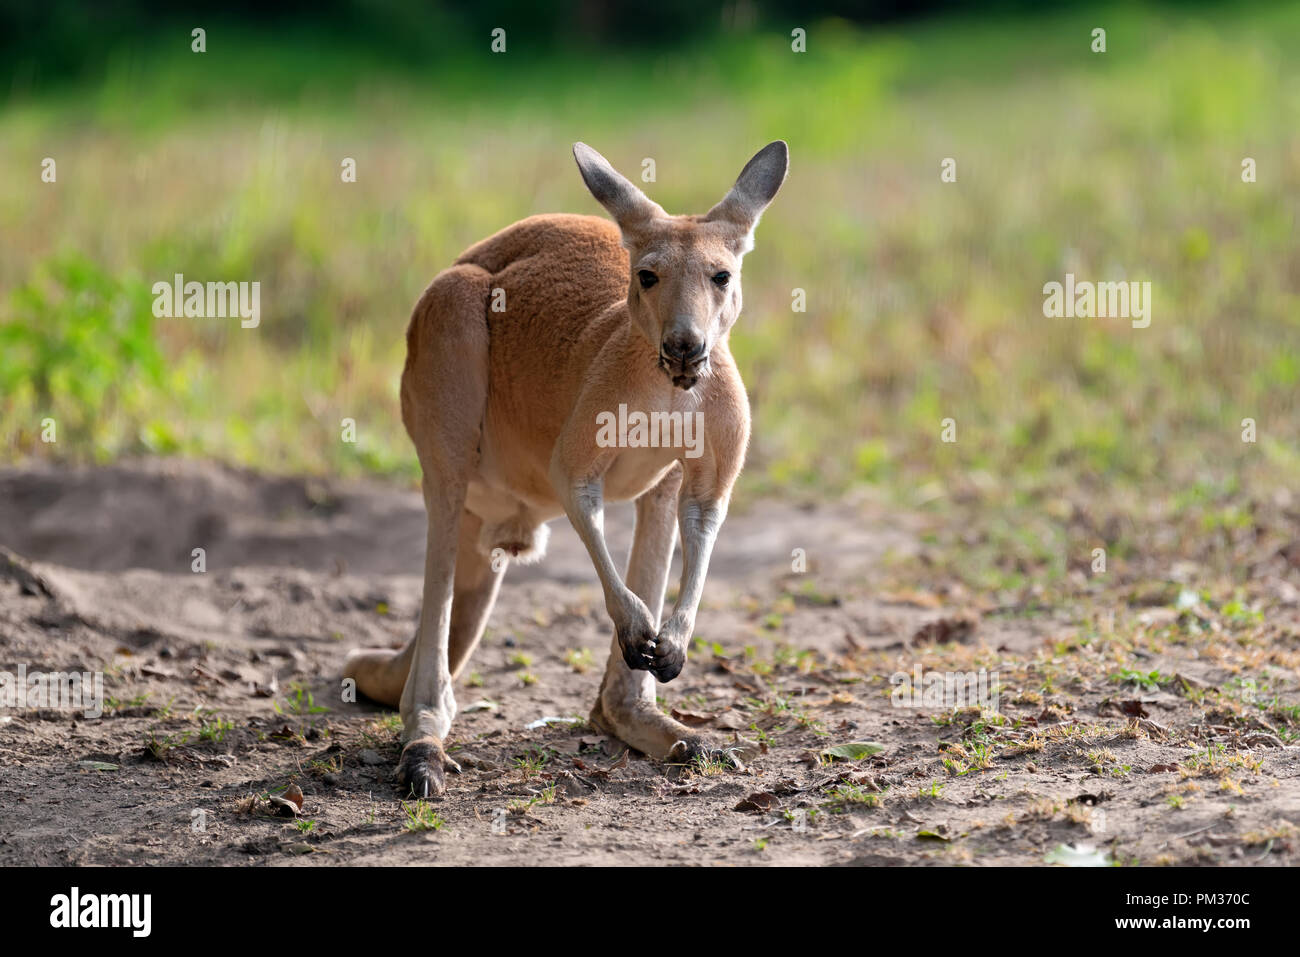 Les jeunes kangaroo dans un habitat naturel dans l'herbe Banque D'Images